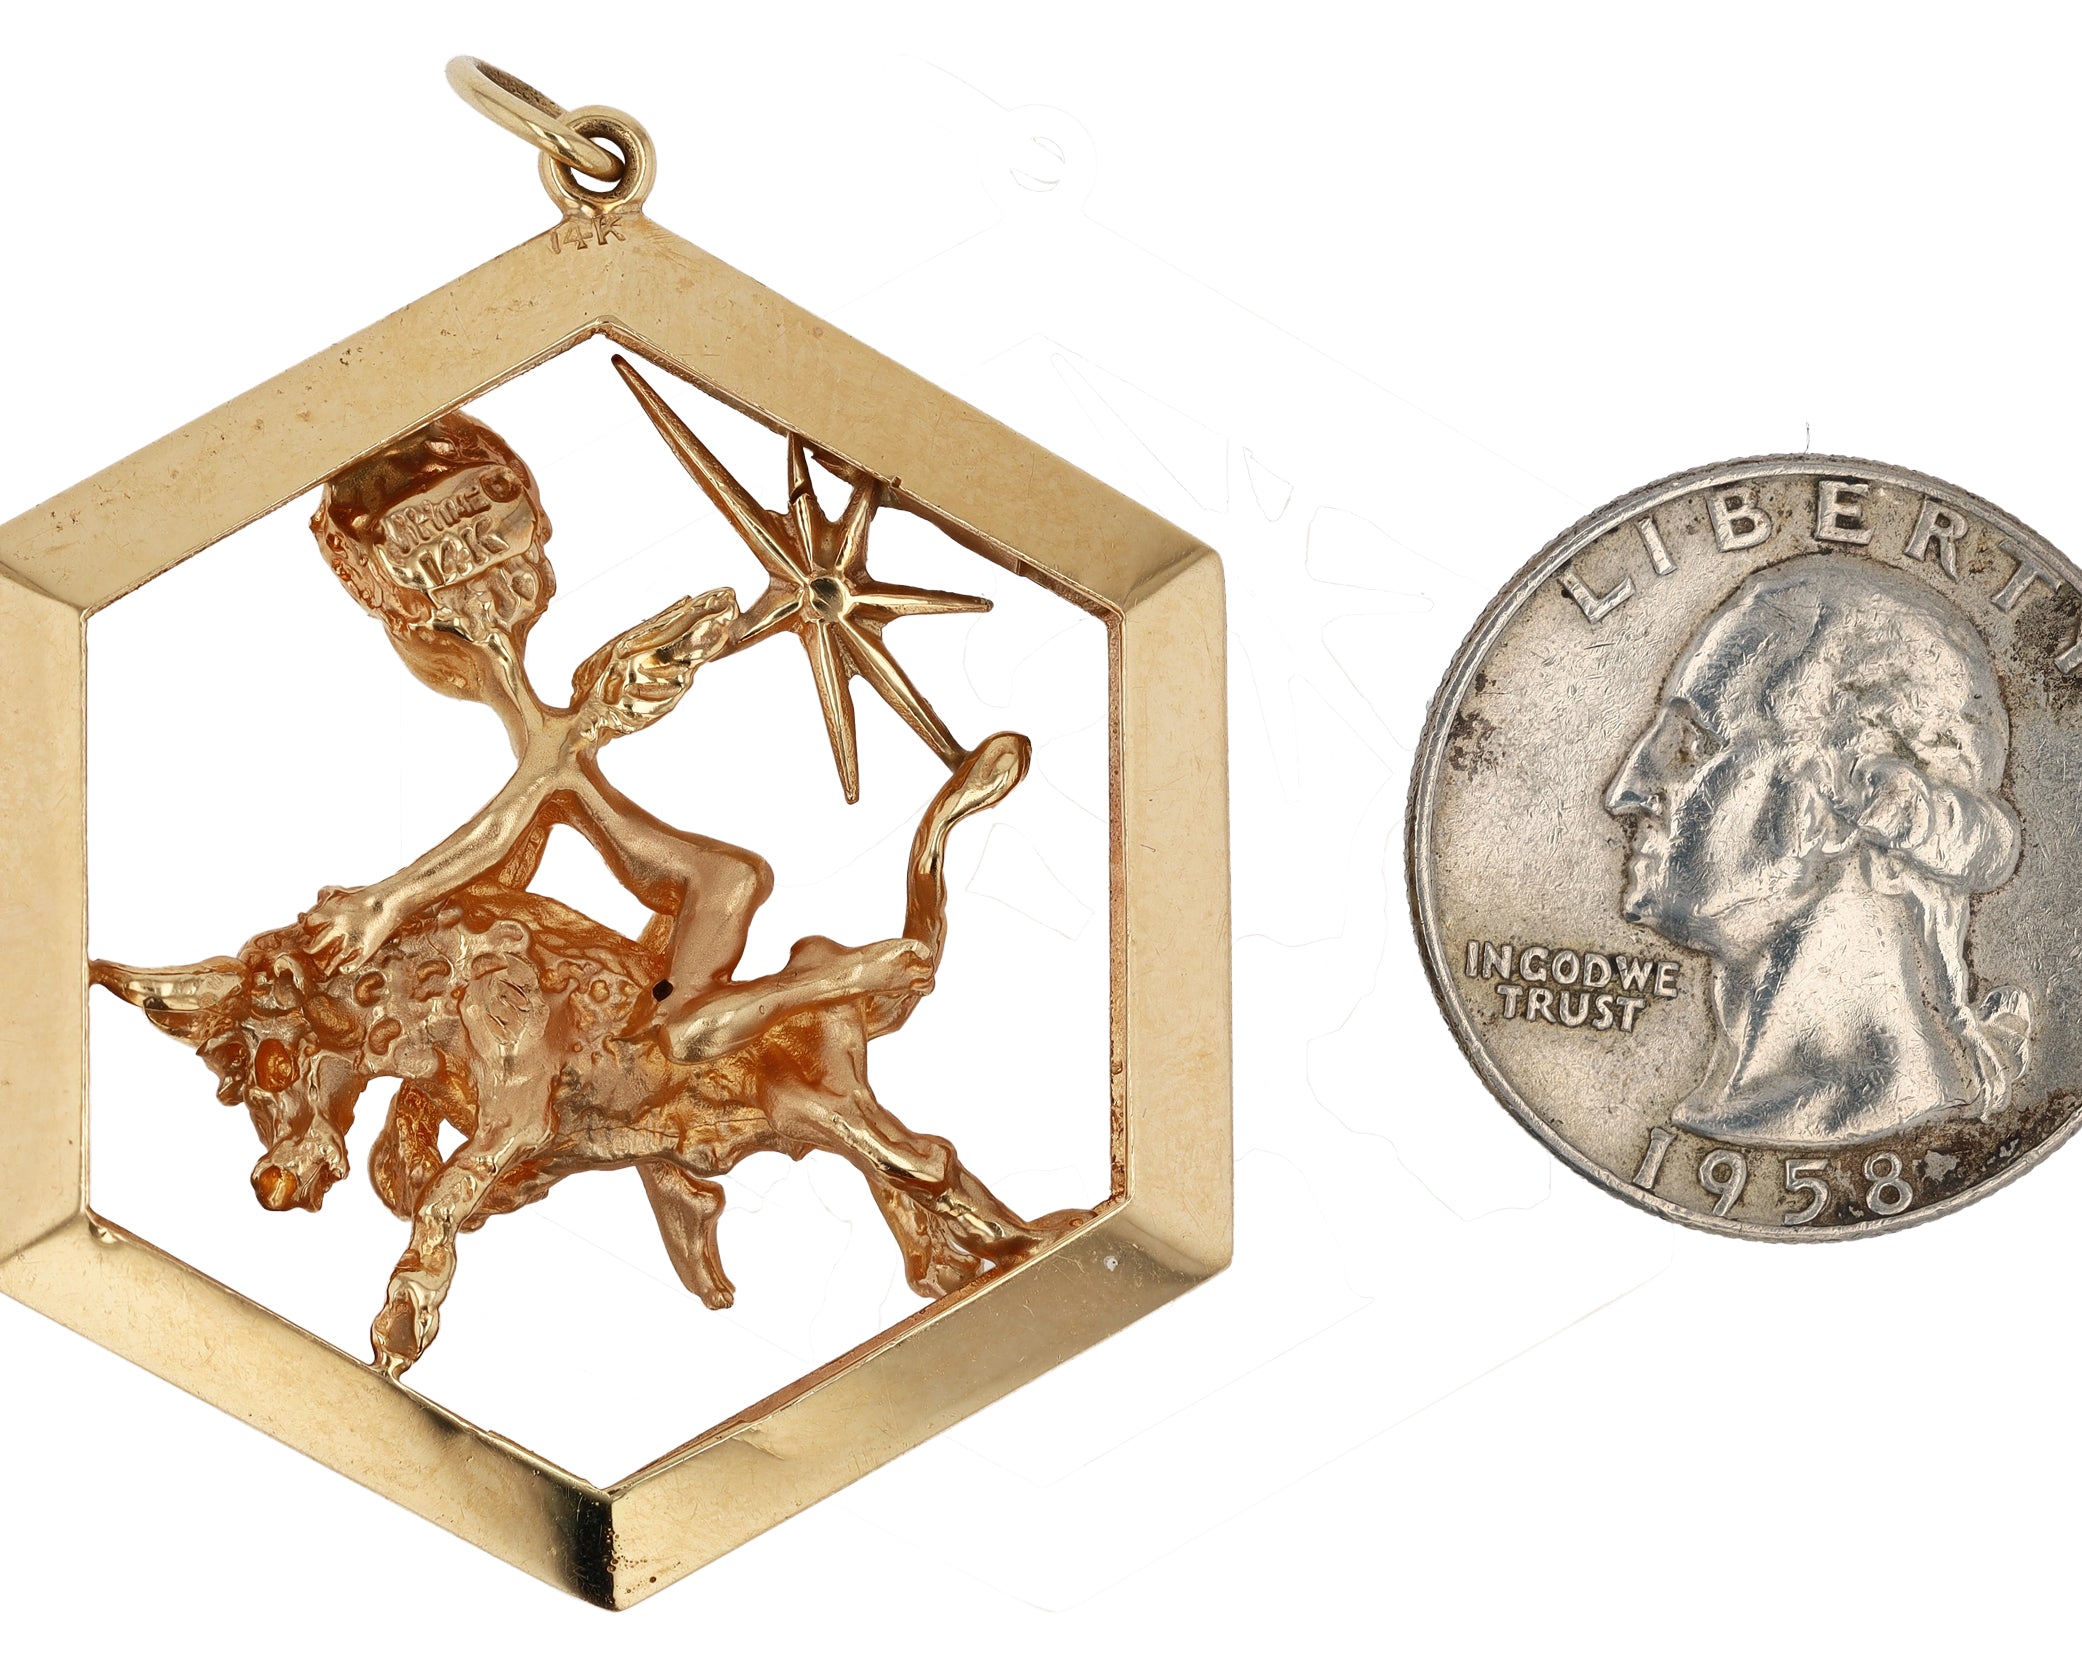 Vintage M. Hime Cherub & Taurus Zodiac Charm Pendant